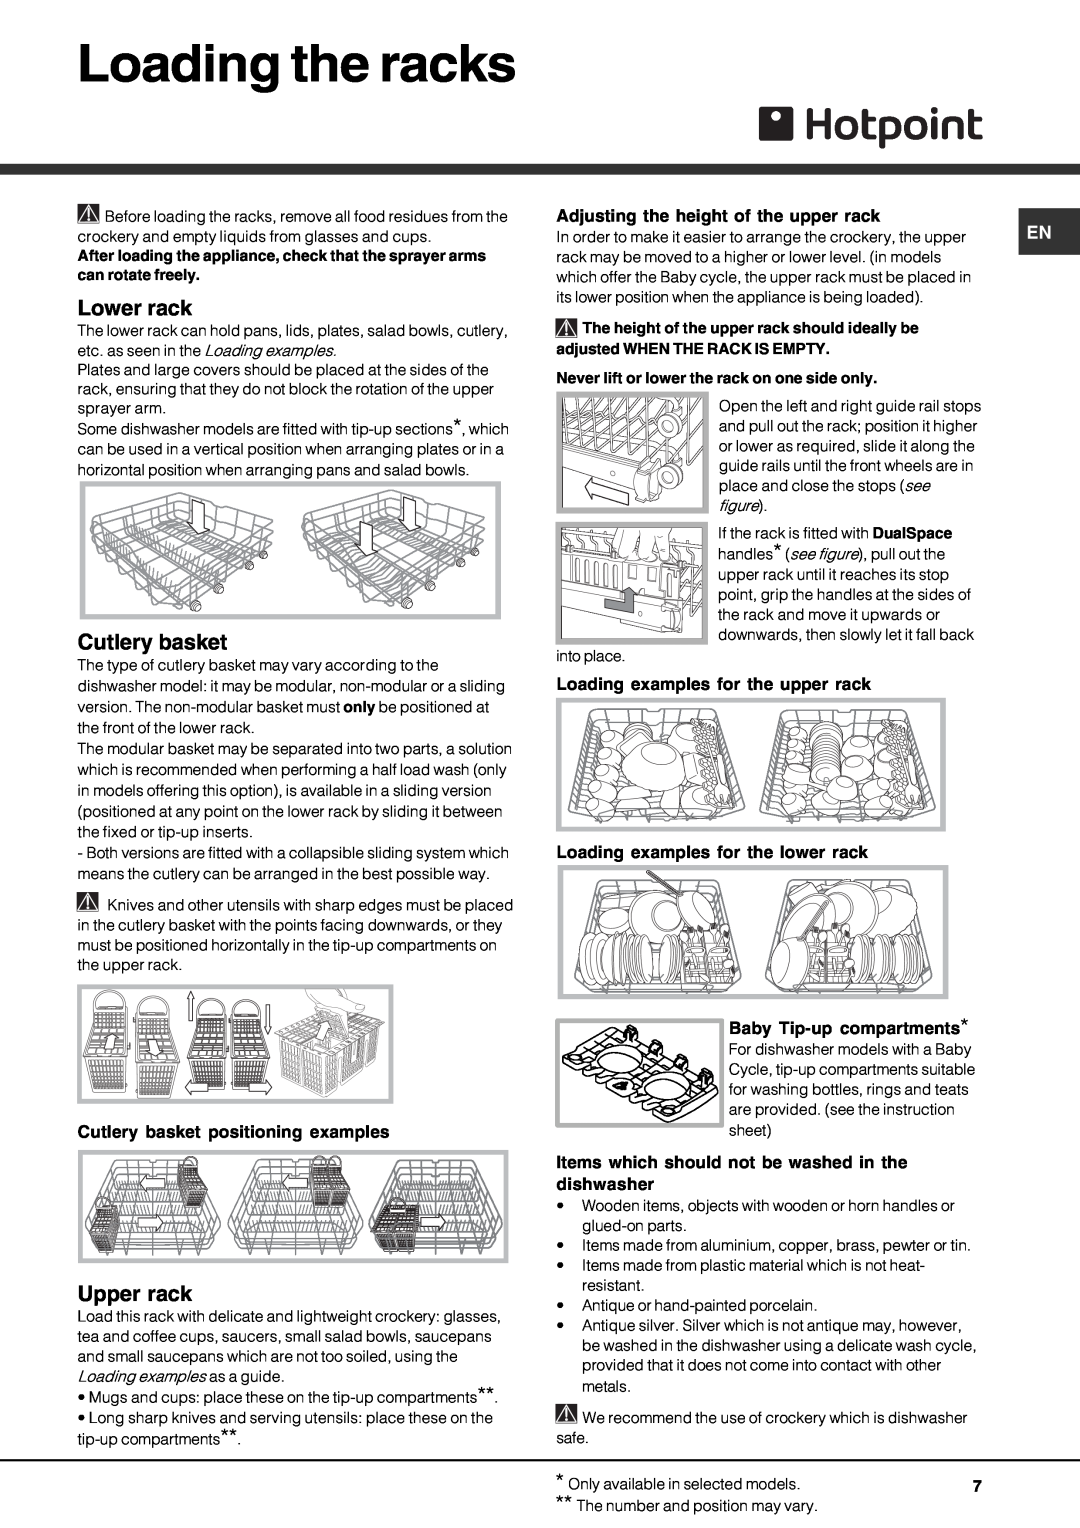 Hotpoint LFZ 338 A/HA IX manual Loading the racks, Lower rack, Cutlery basket, Upper rack 